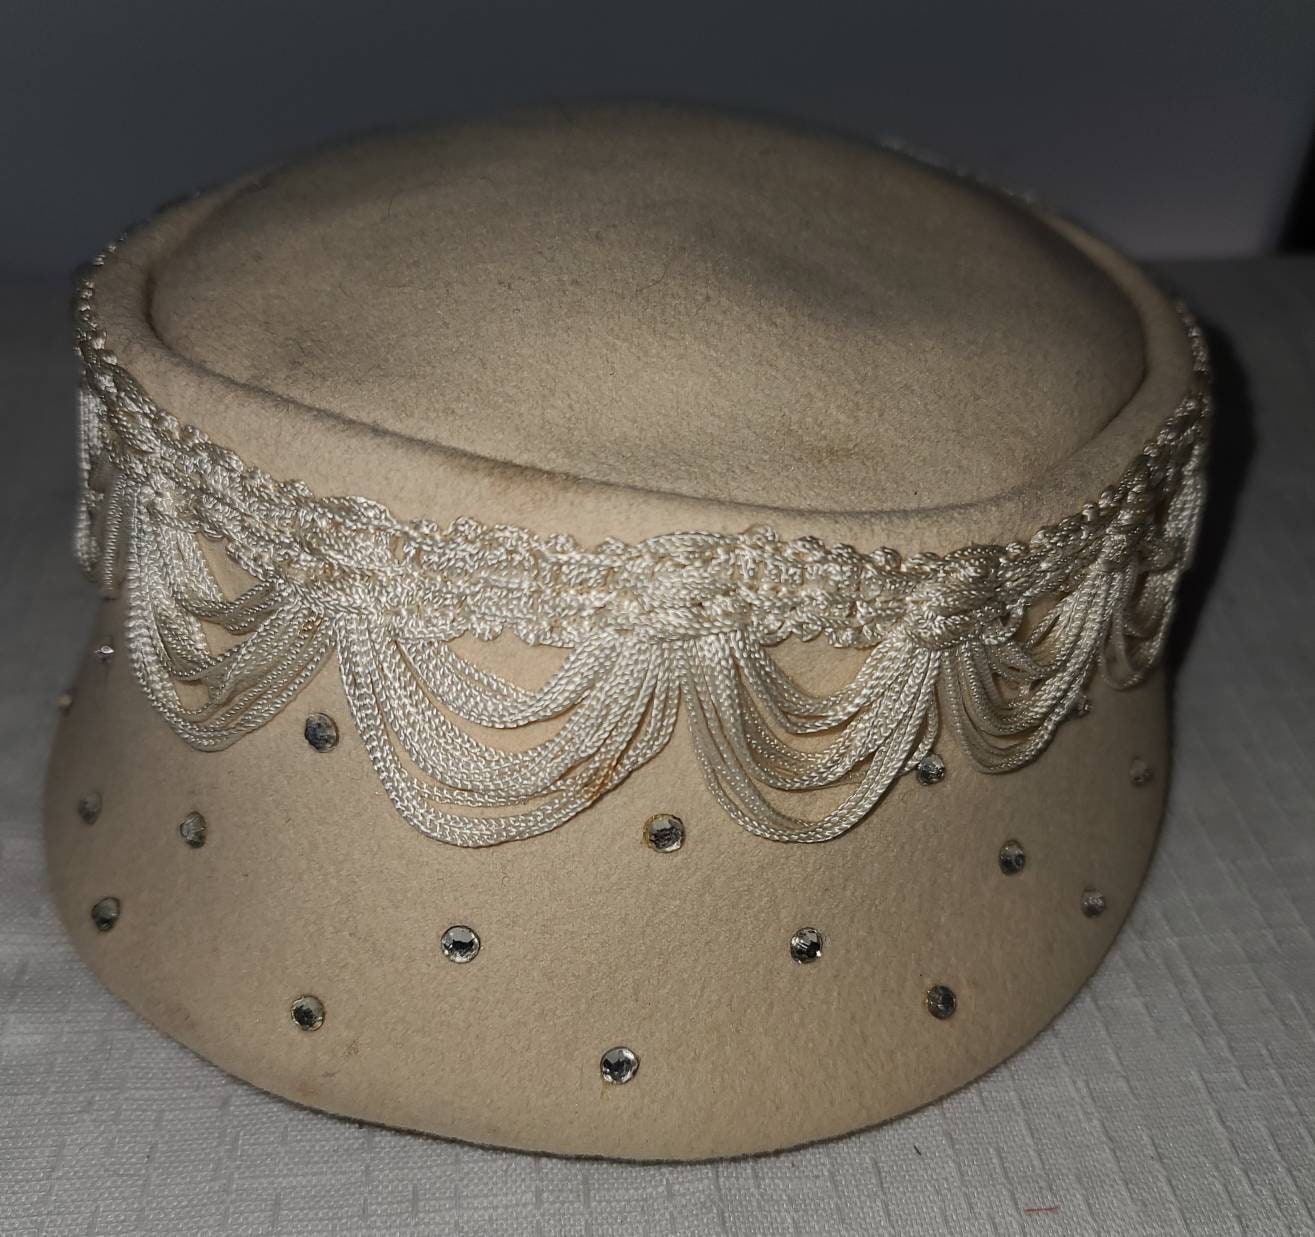 SALE Vintage 1950s 60s Hat Round Cream Felt Hat Tassel Trim Prong Set Rhinestones Pillbox Hat Rockabilly Mod Boho 22 in. a few spots